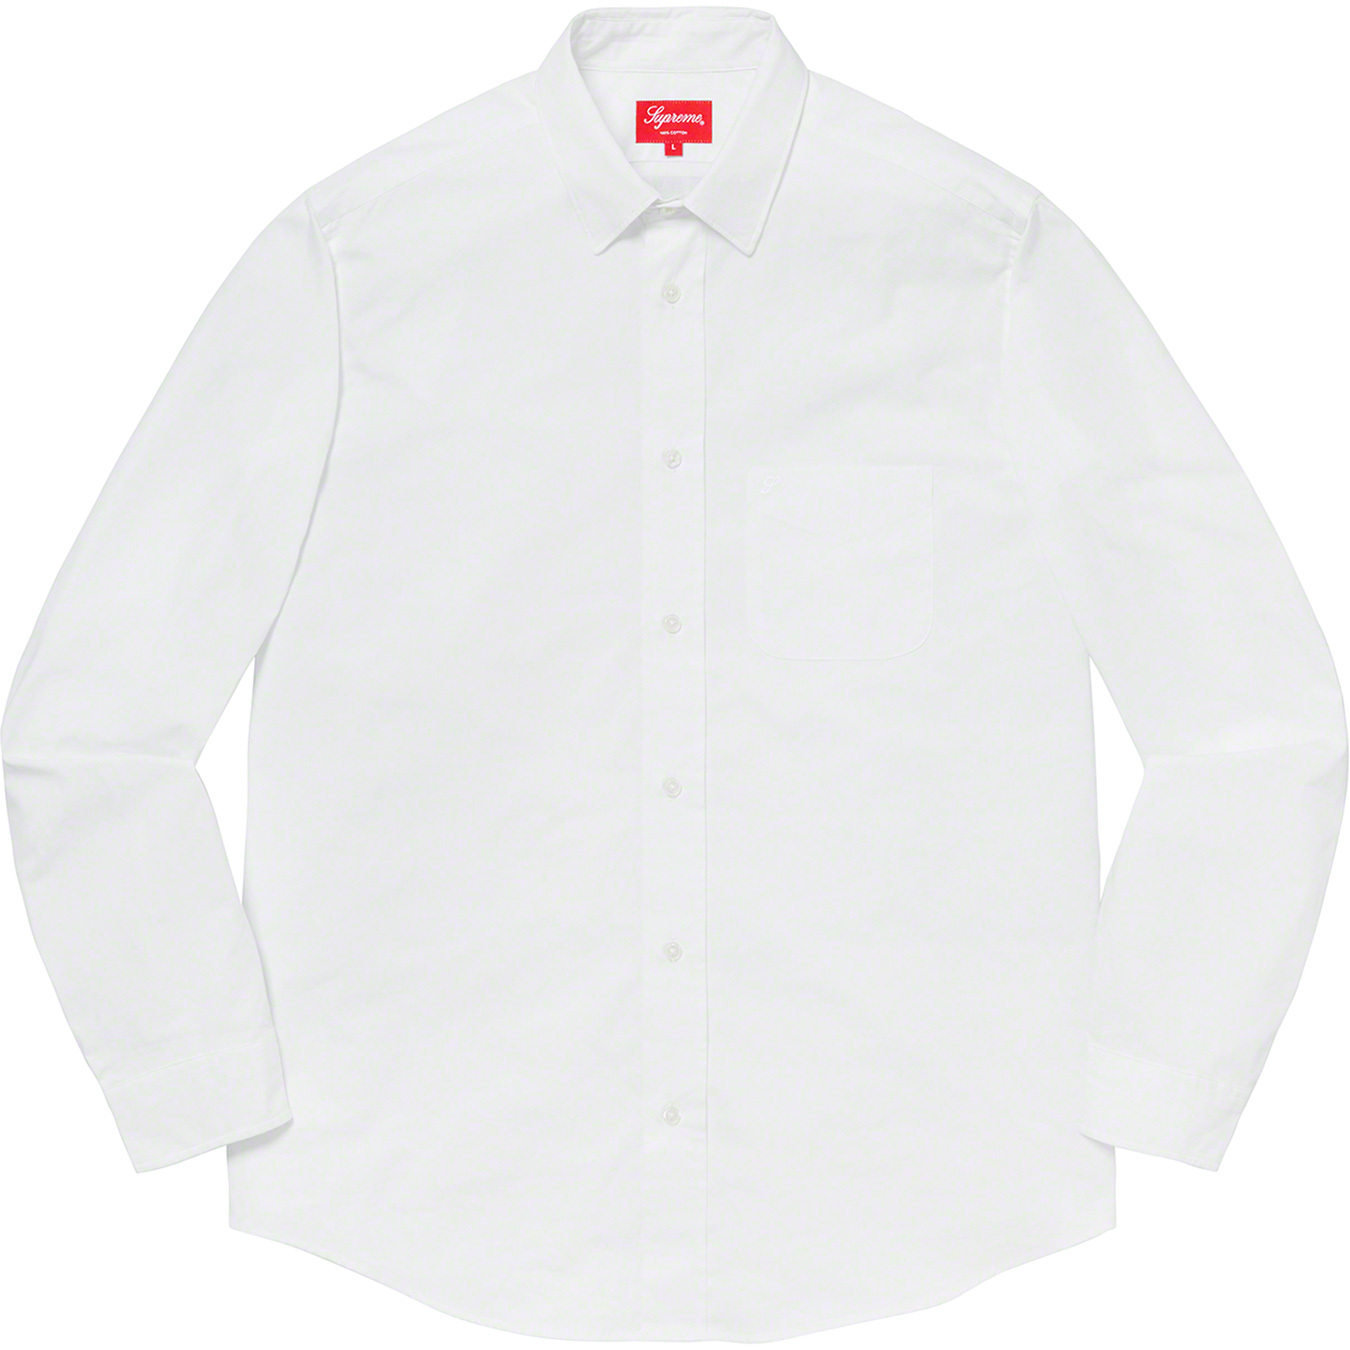 Leigh Bowery/Supreme Airbrushed Shirt